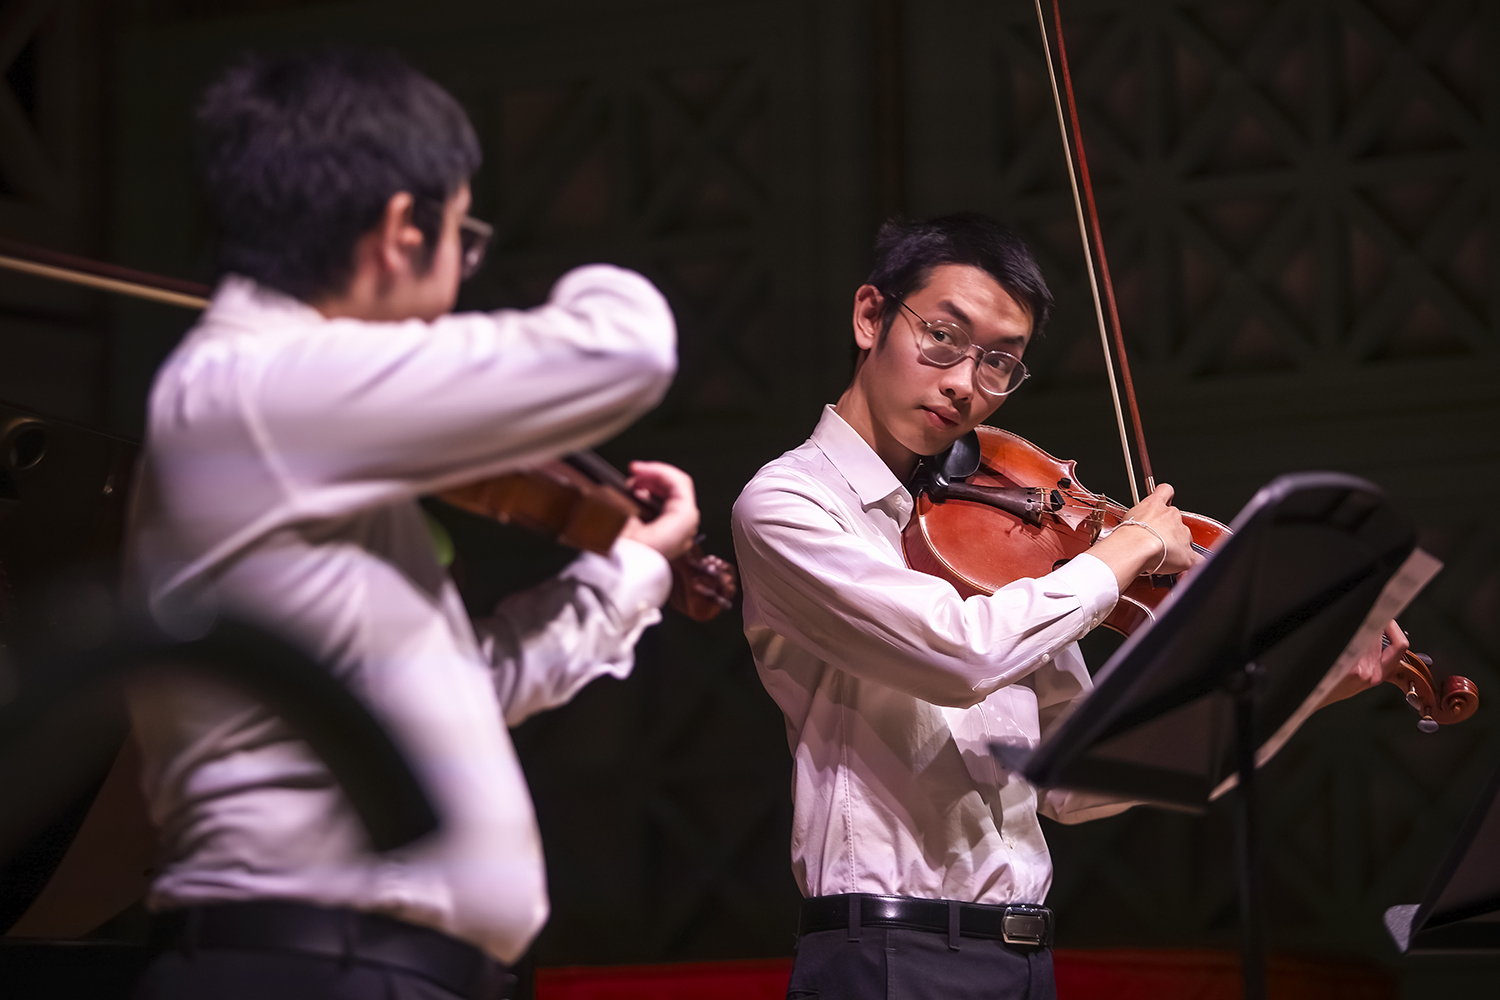 Three violinists perform onstage at the RCM Performance Hall